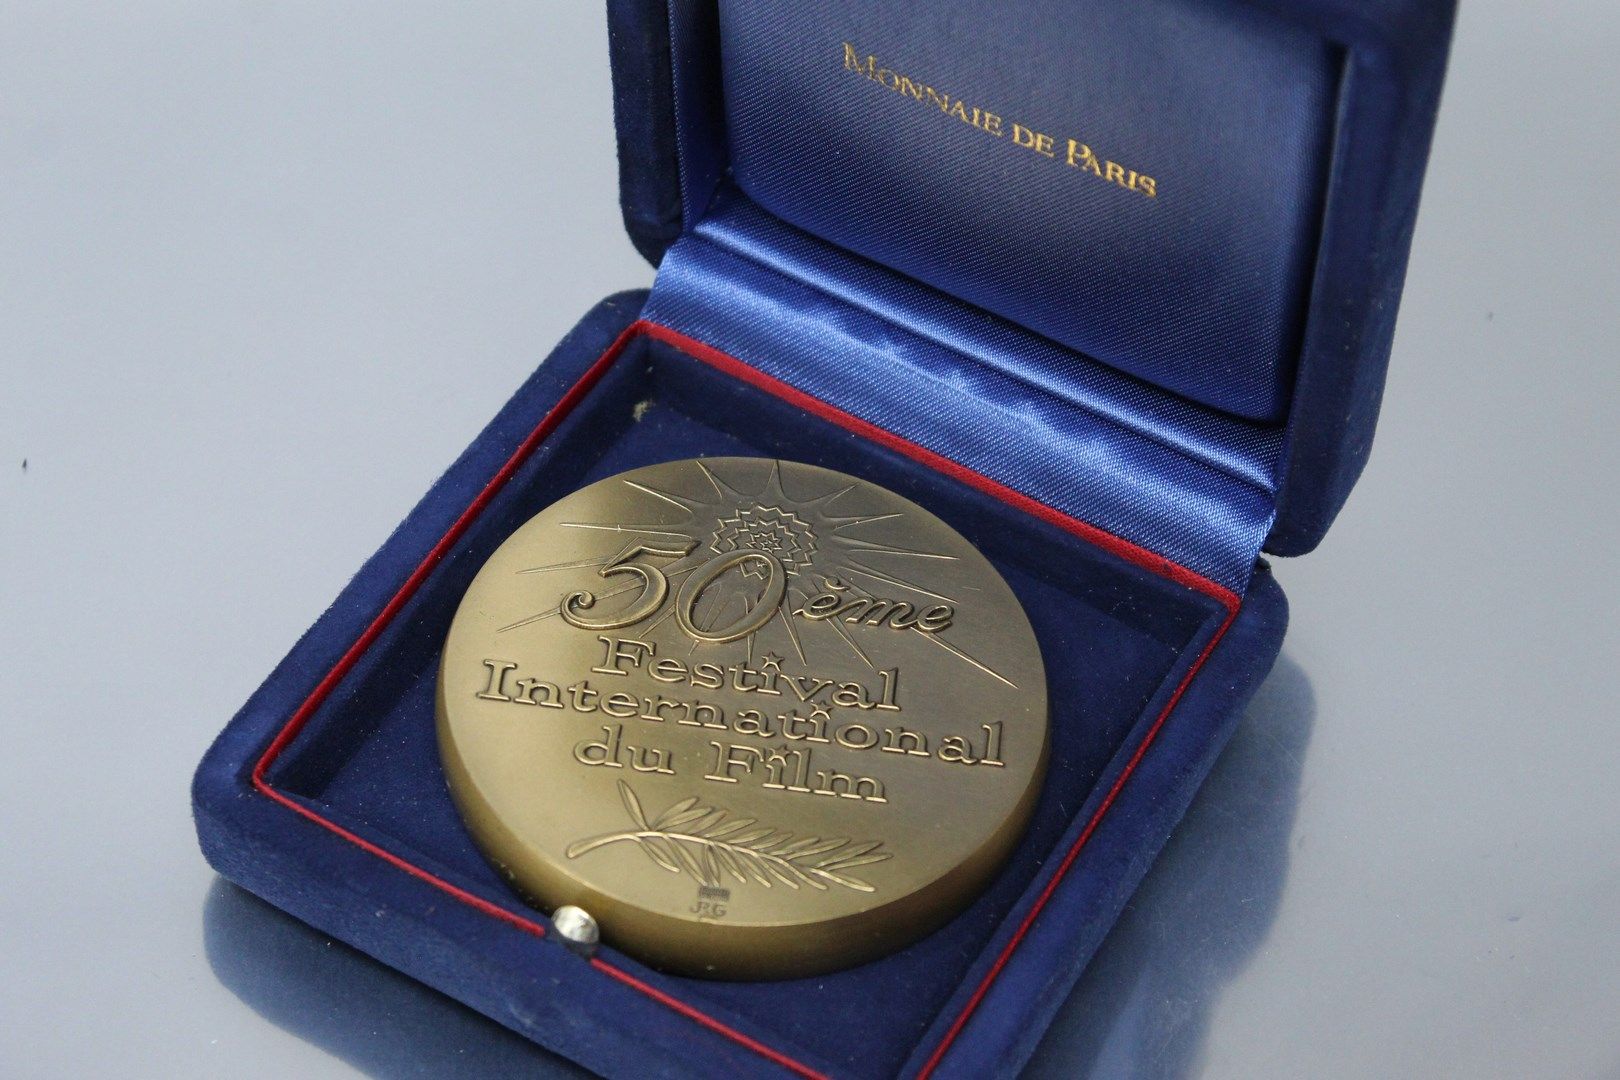 Null 巴黎货币

第50届戛纳国际电影节铜奖，由让-皮埃尔-根迪斯获得。

正面：CANNES 1997，一男一女拿着蝴蝶网，追逐着星星，底纹：Gendis&hellip;